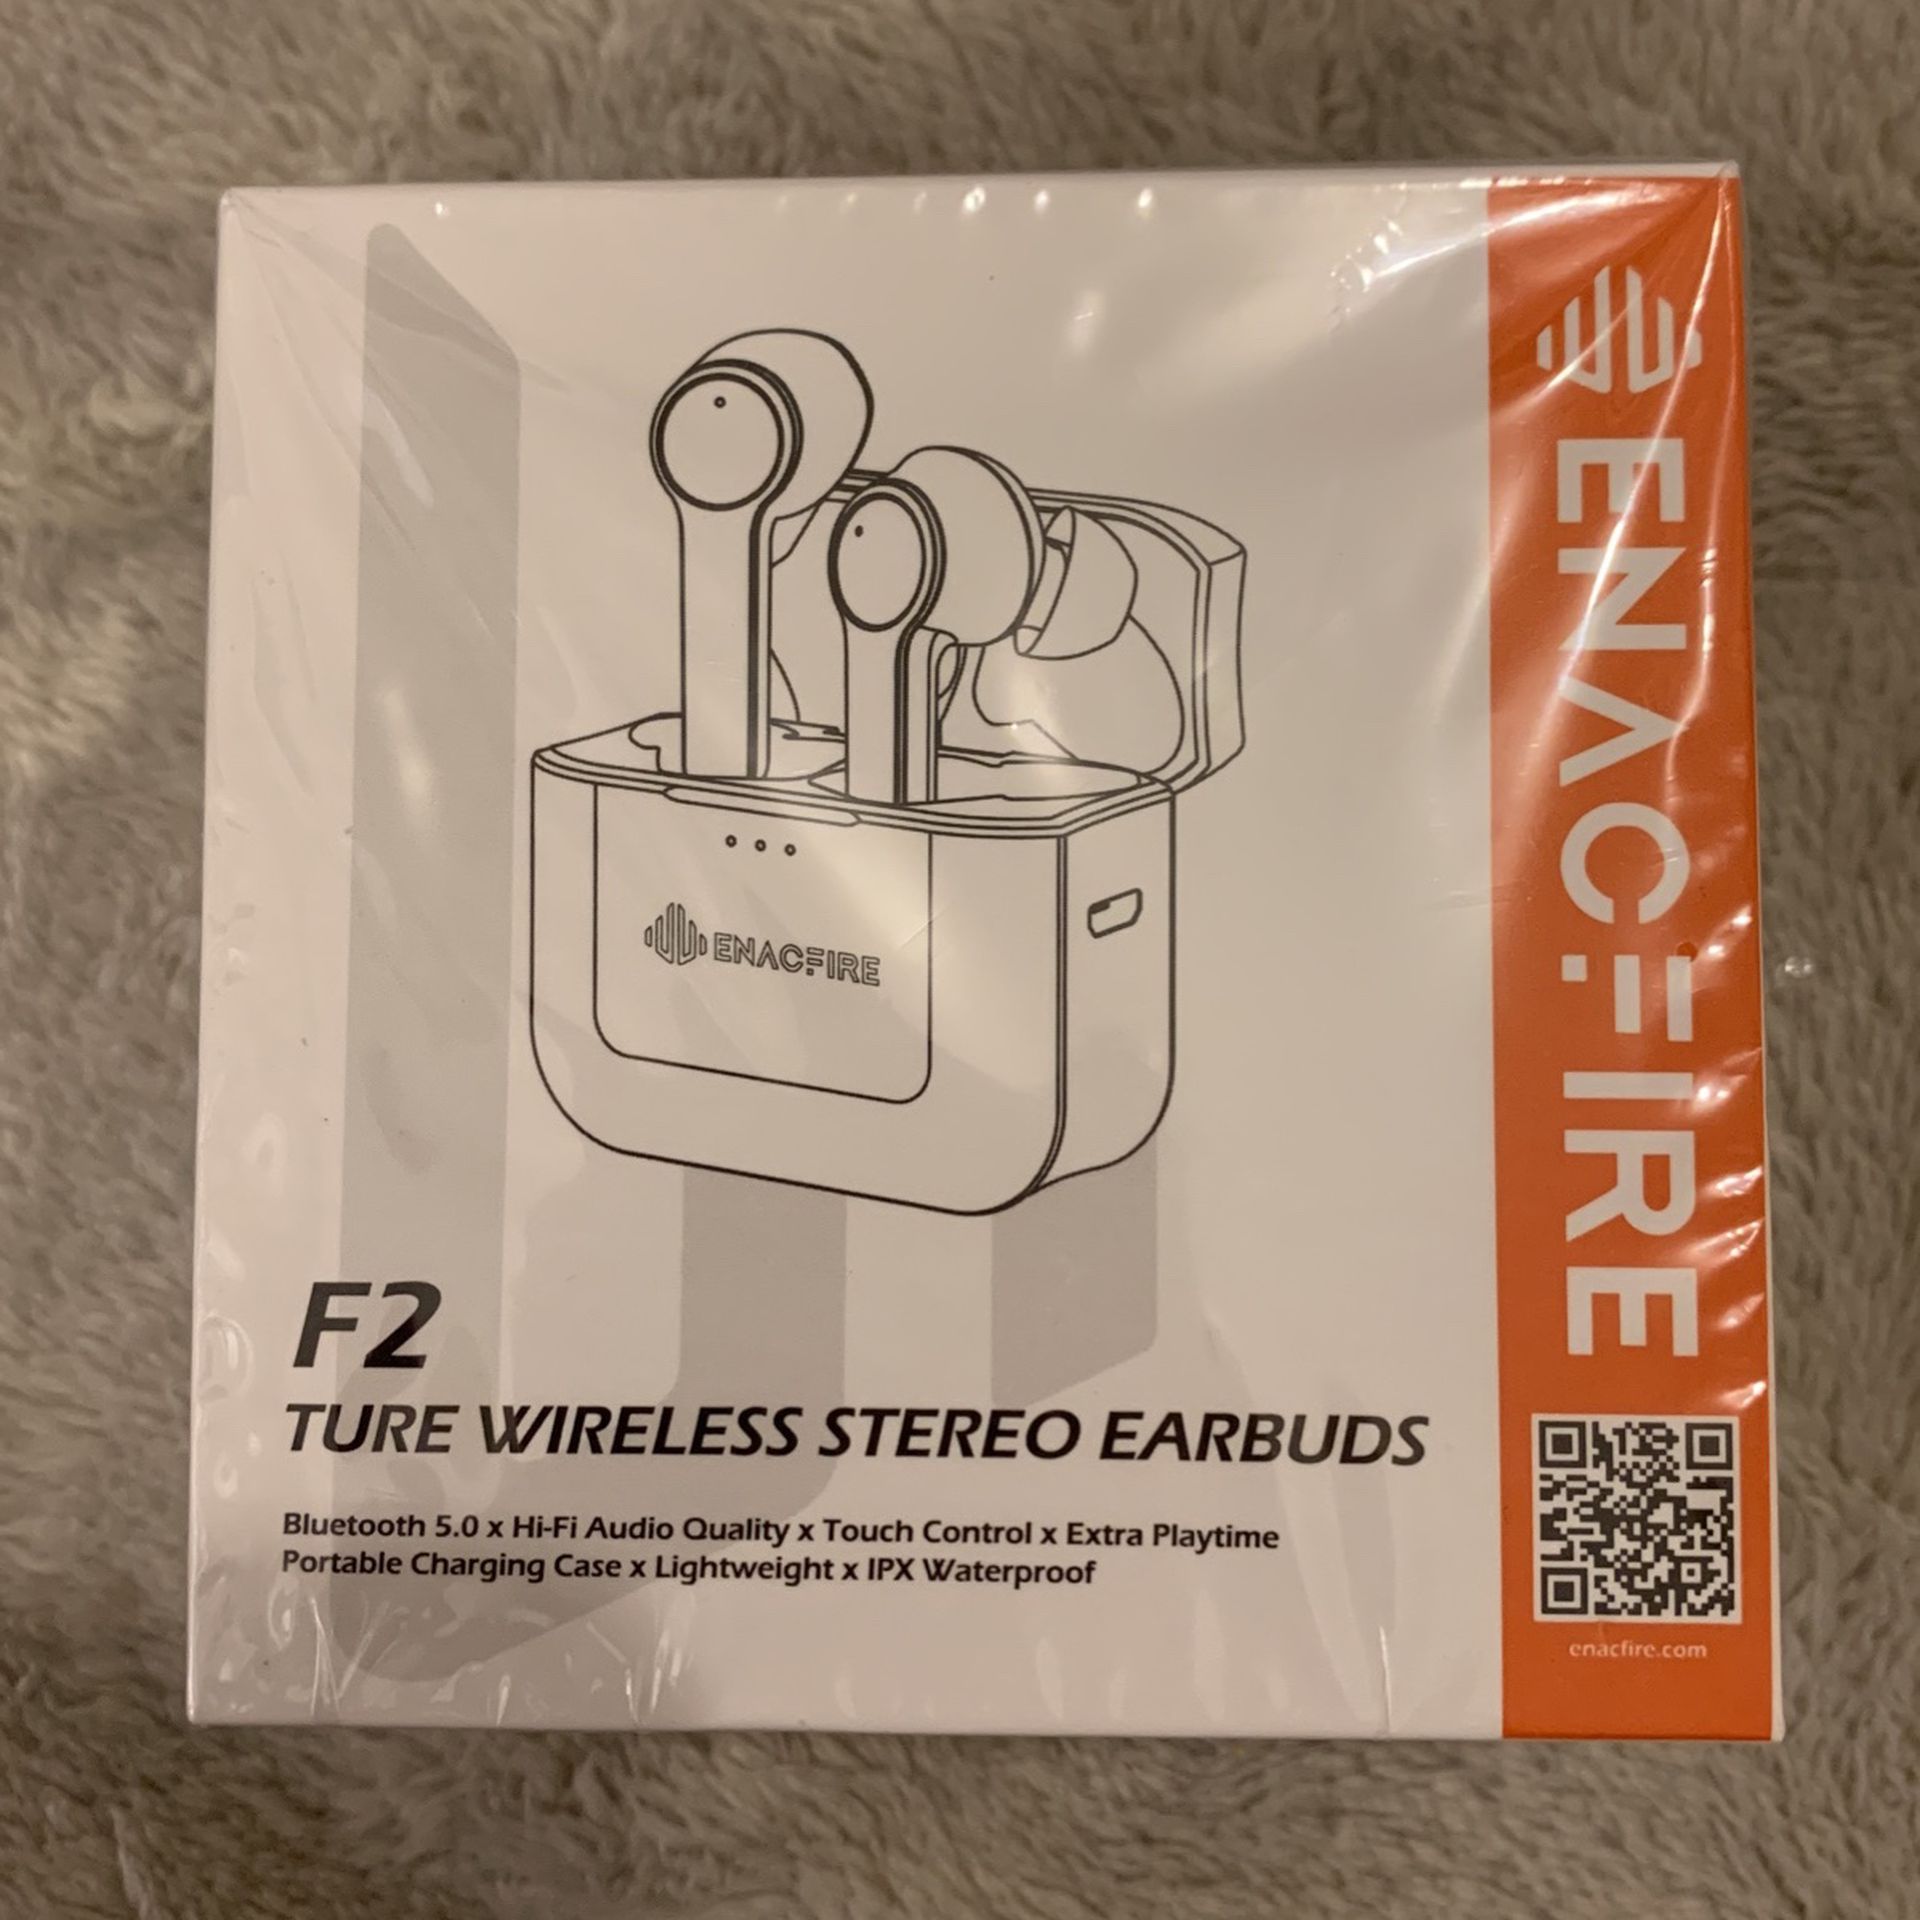 2021 Enacfire F2 earbuds